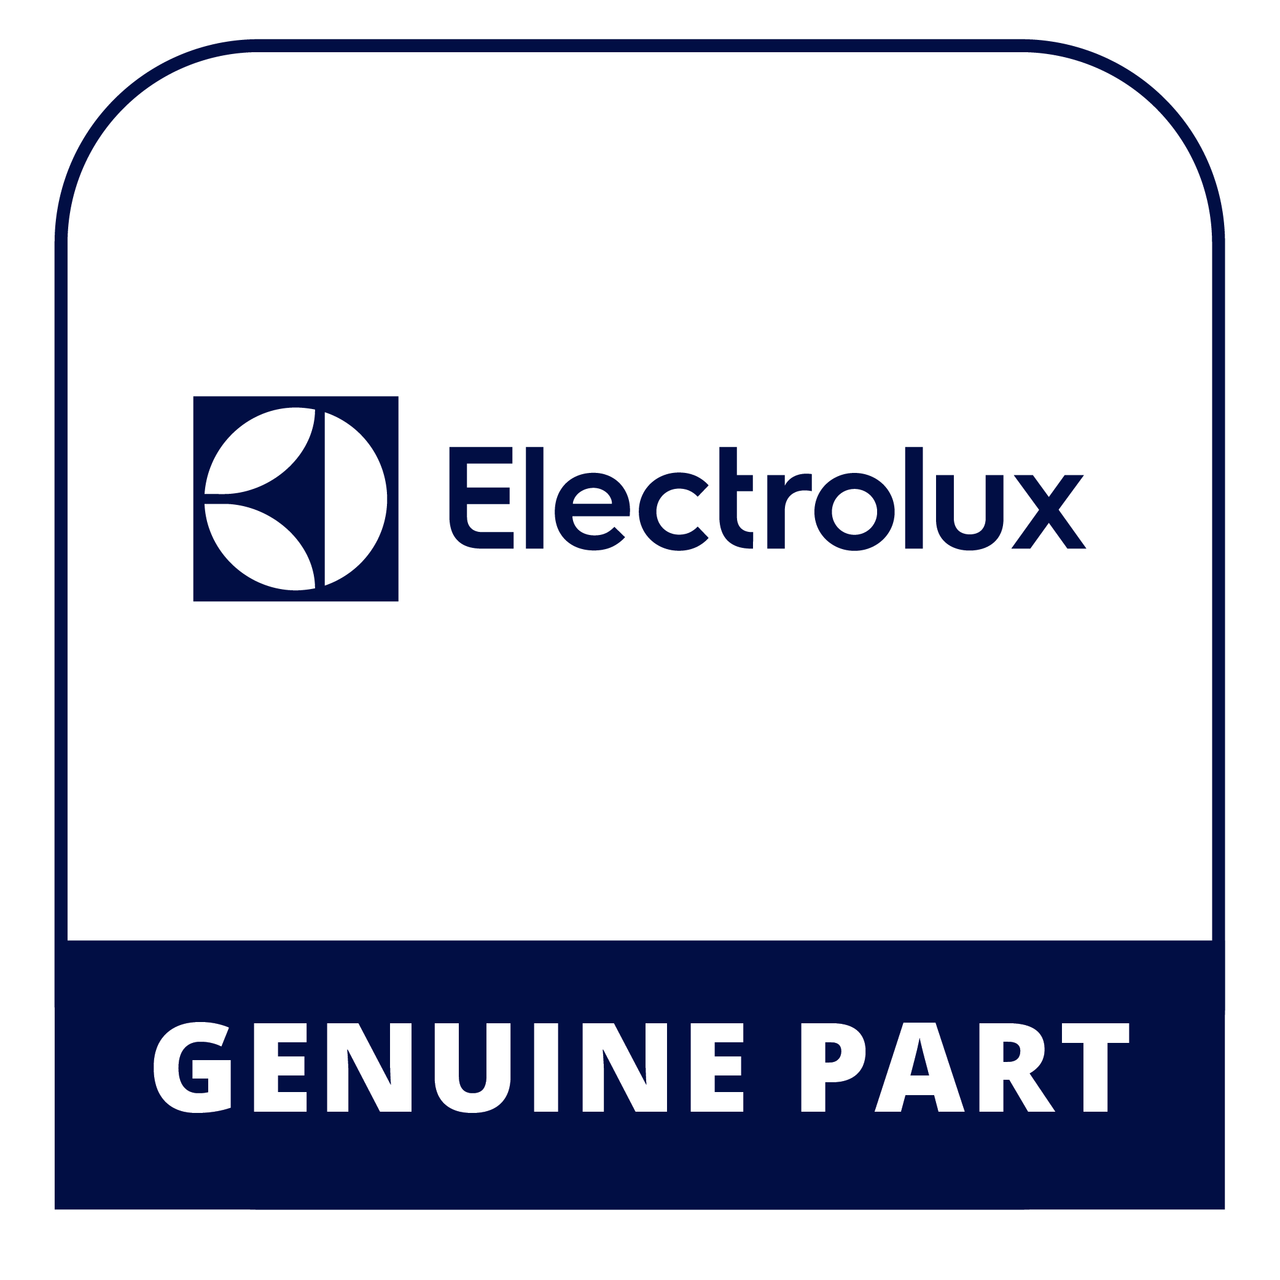 Frigidaire - Electrolux 137309800 - Door Sag Kit - Genuine Electrolux Part